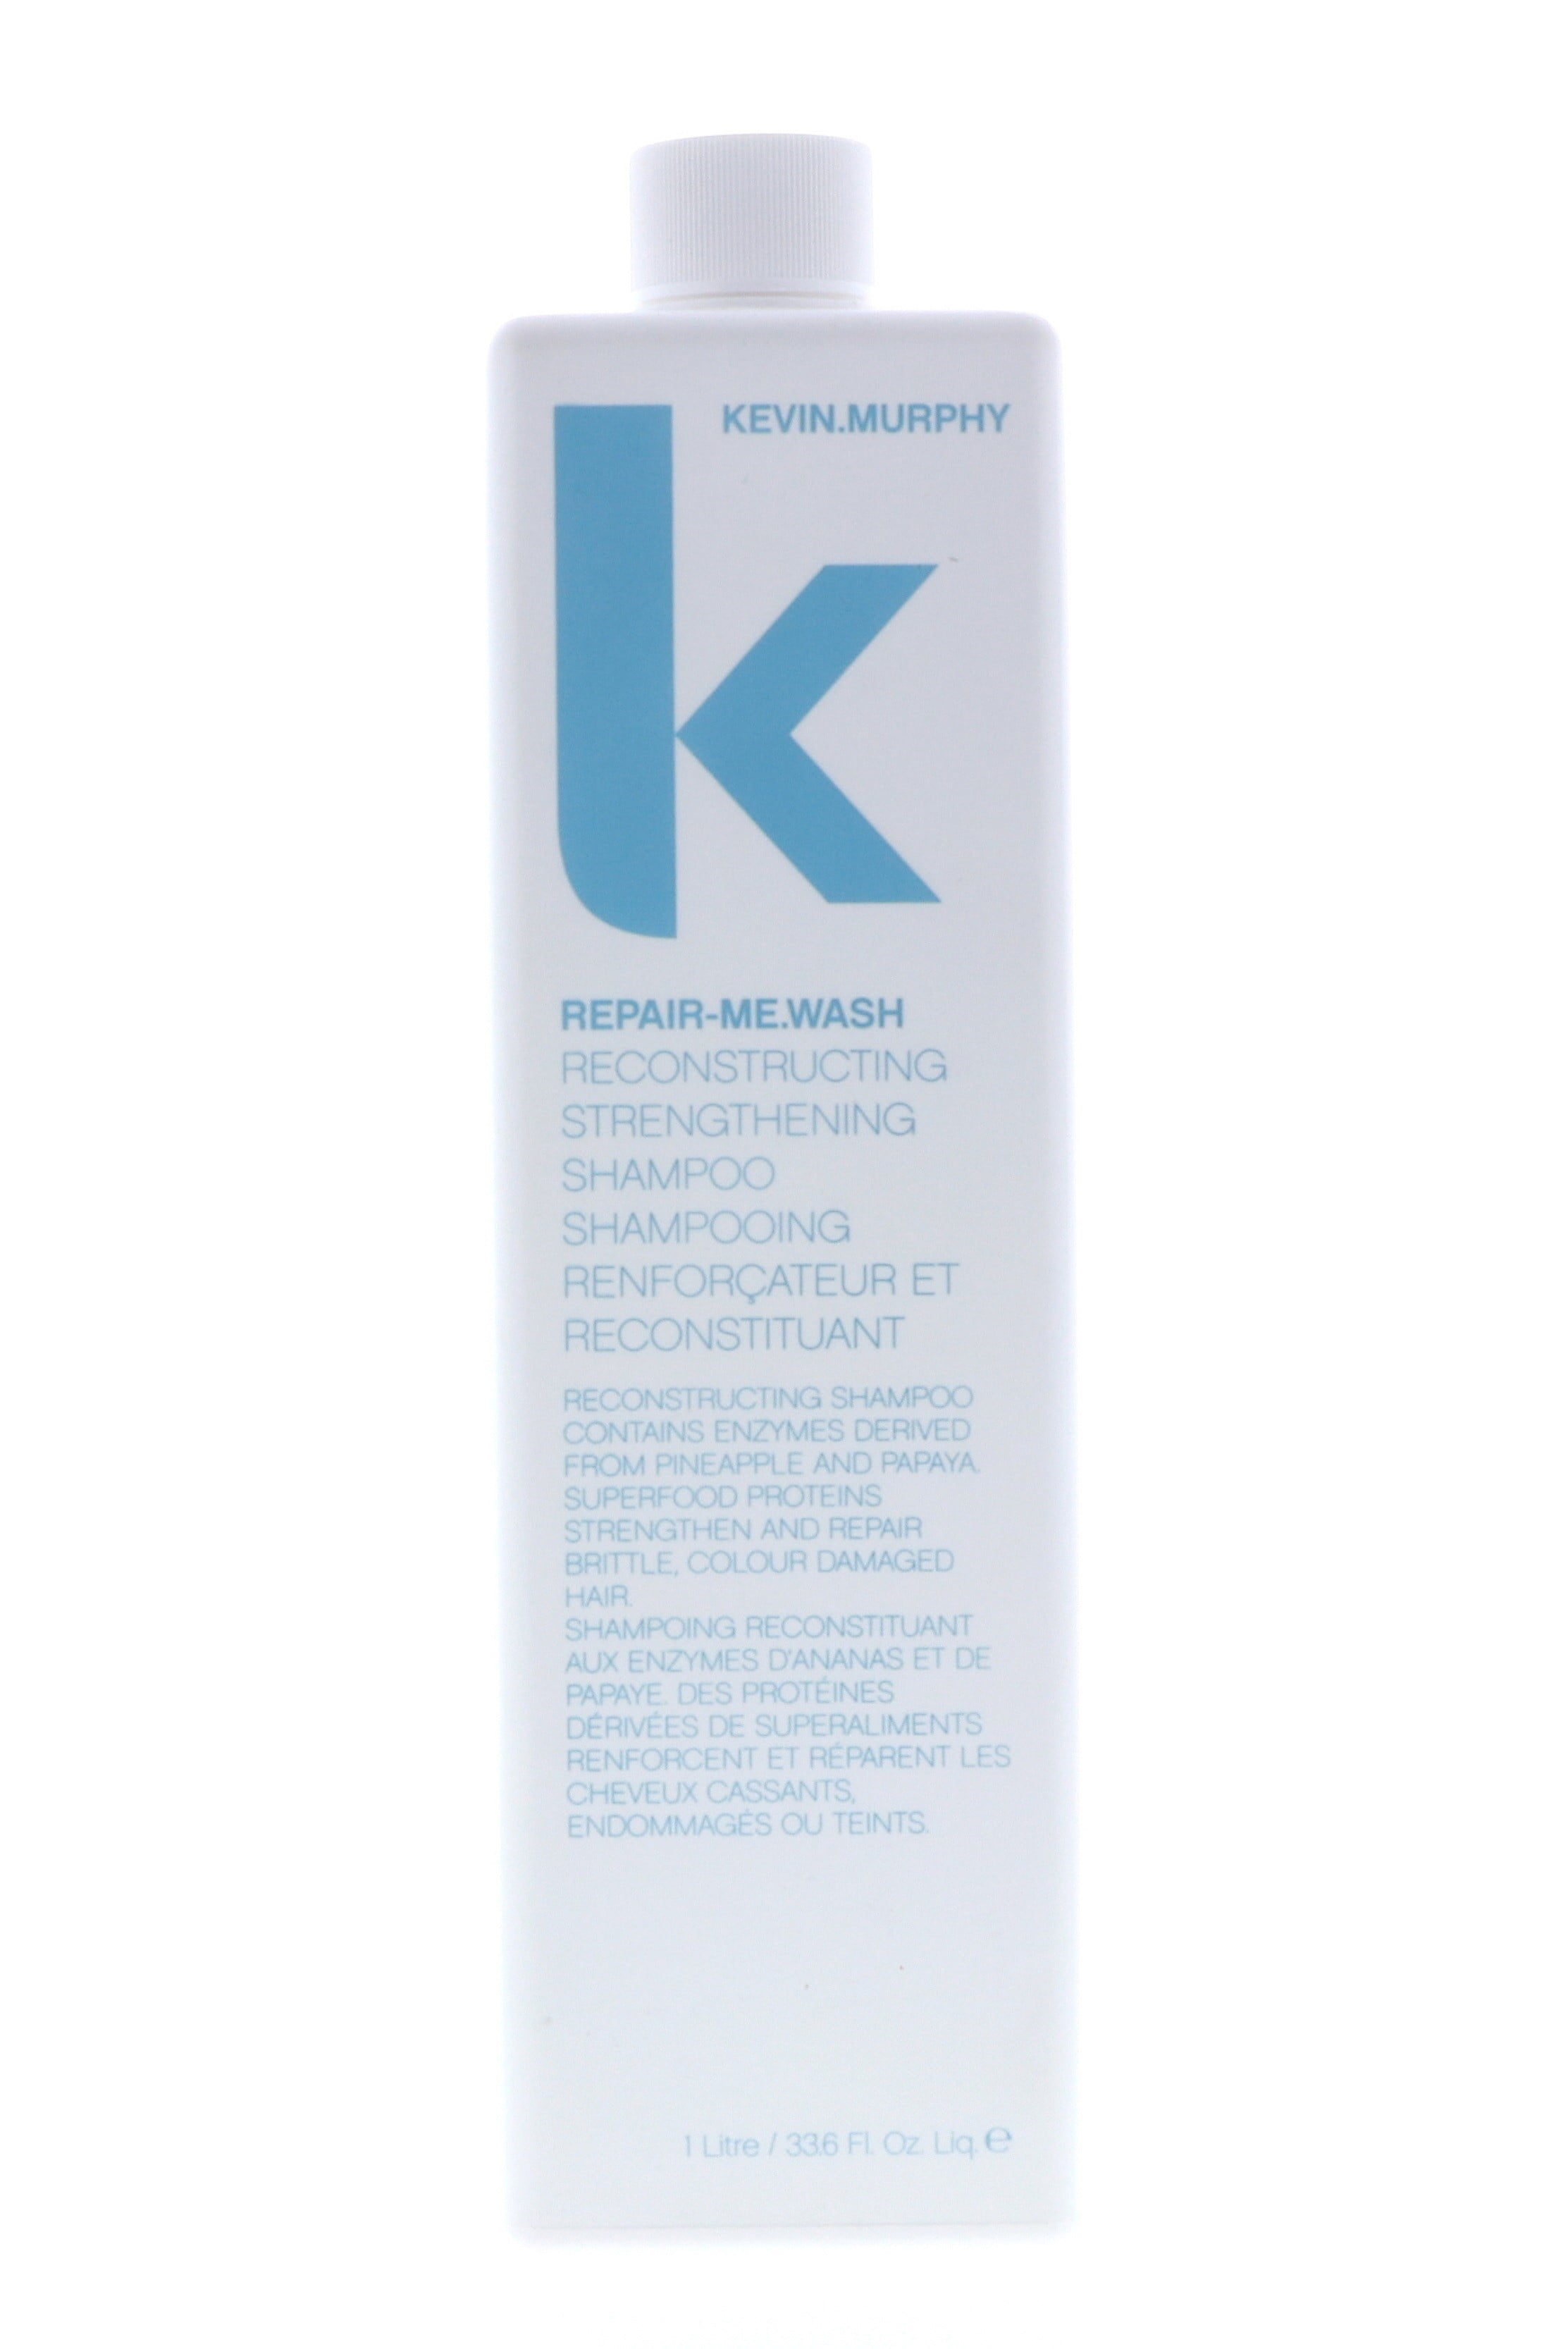 Kevin Murphy Repair-Me Wash Shampoo, 33.6 oz -